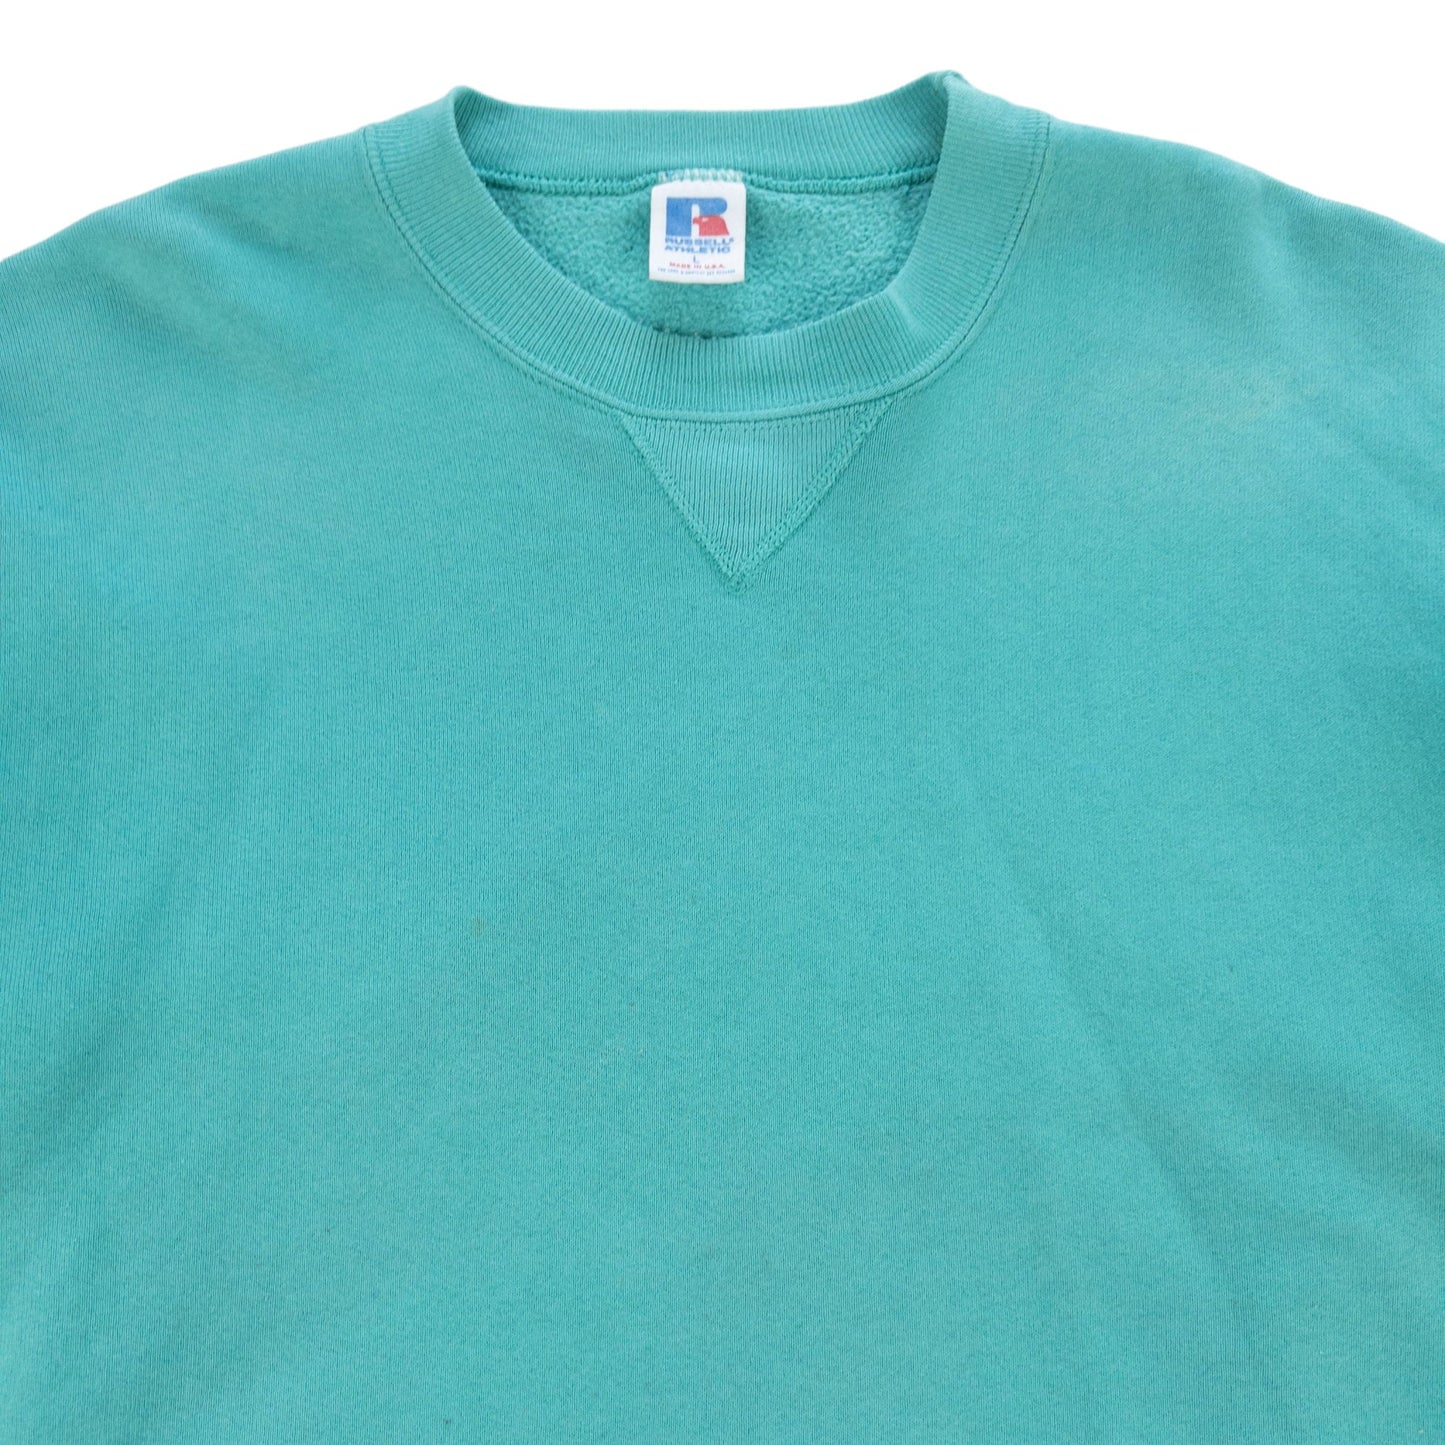 Vintage Russel Athletic Sweatshirt Size M